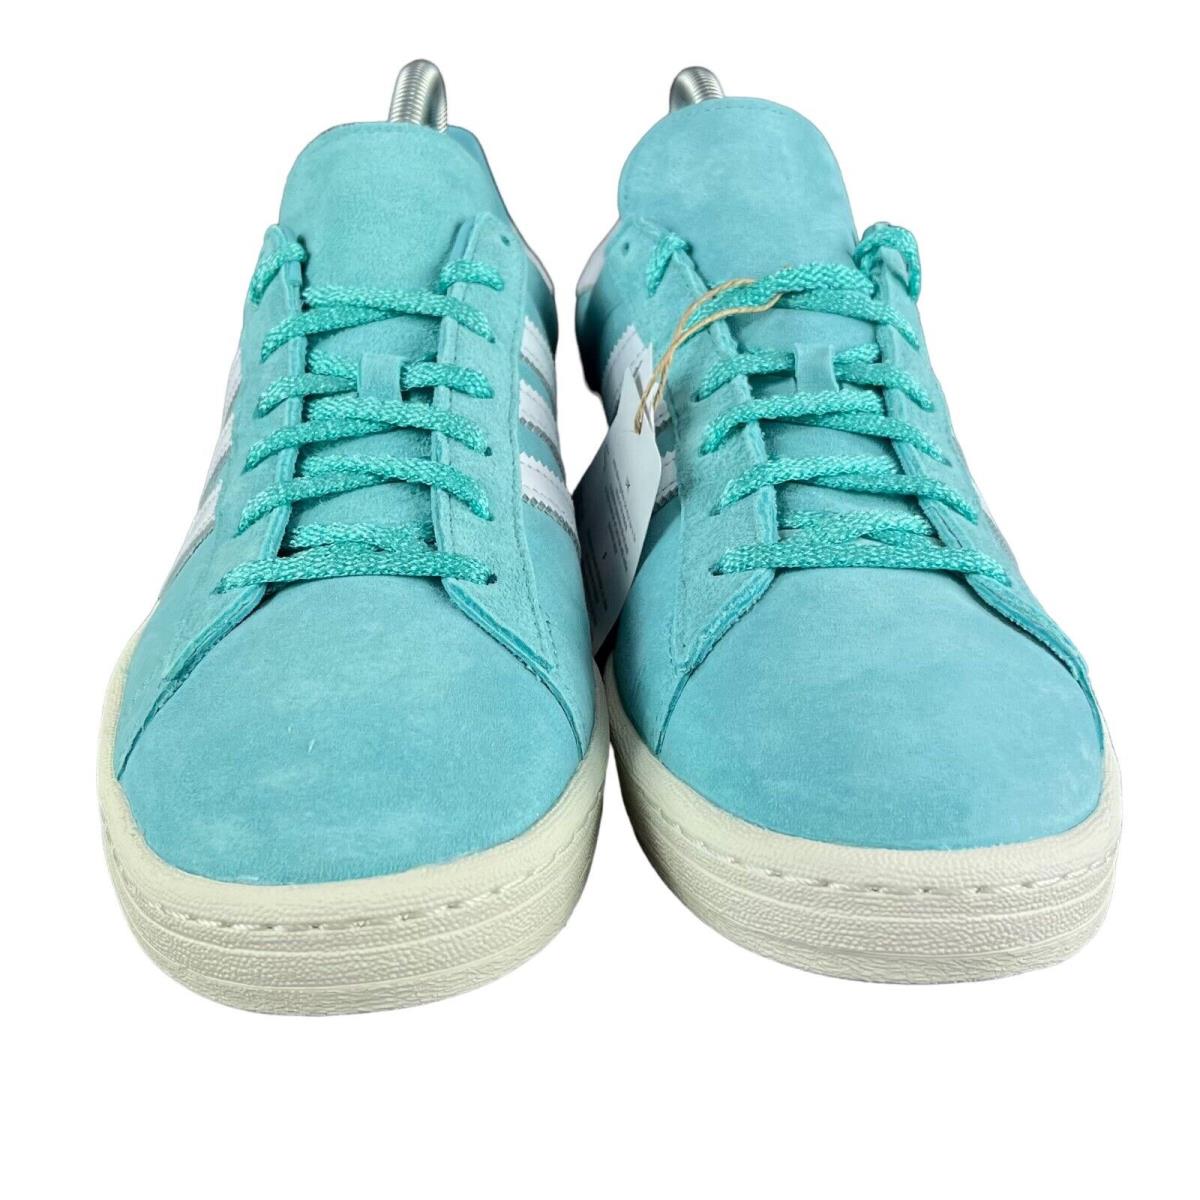 Adidas Originals Campus 80s Turquoise White Suede Shoes ID7318 Men`s Sizes 7-13 - Blue